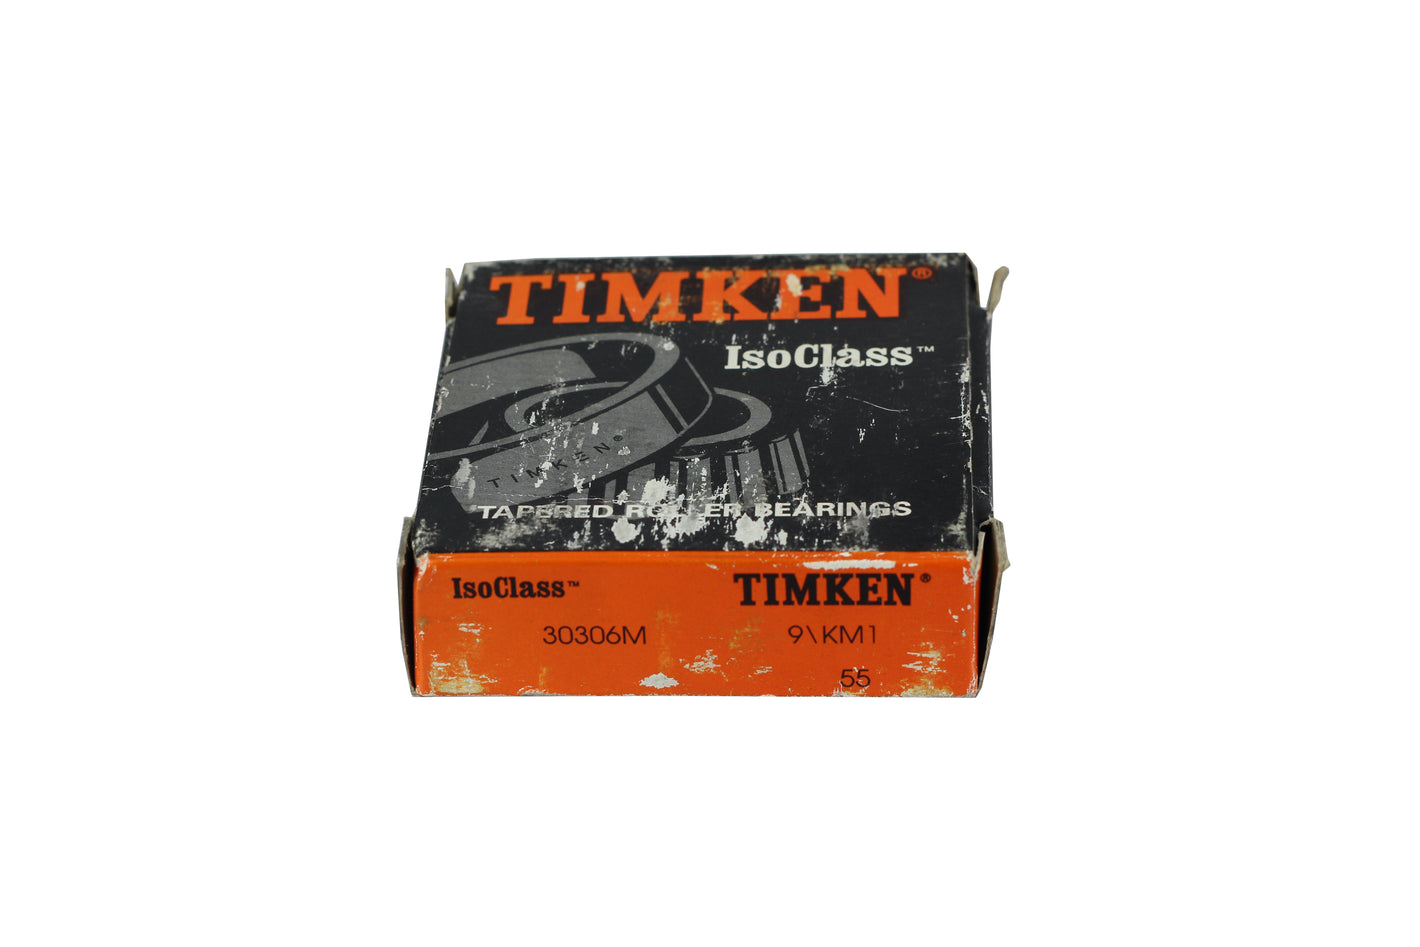 Timken IsoClass 30306M 9/KM1 Kegelrollenlager